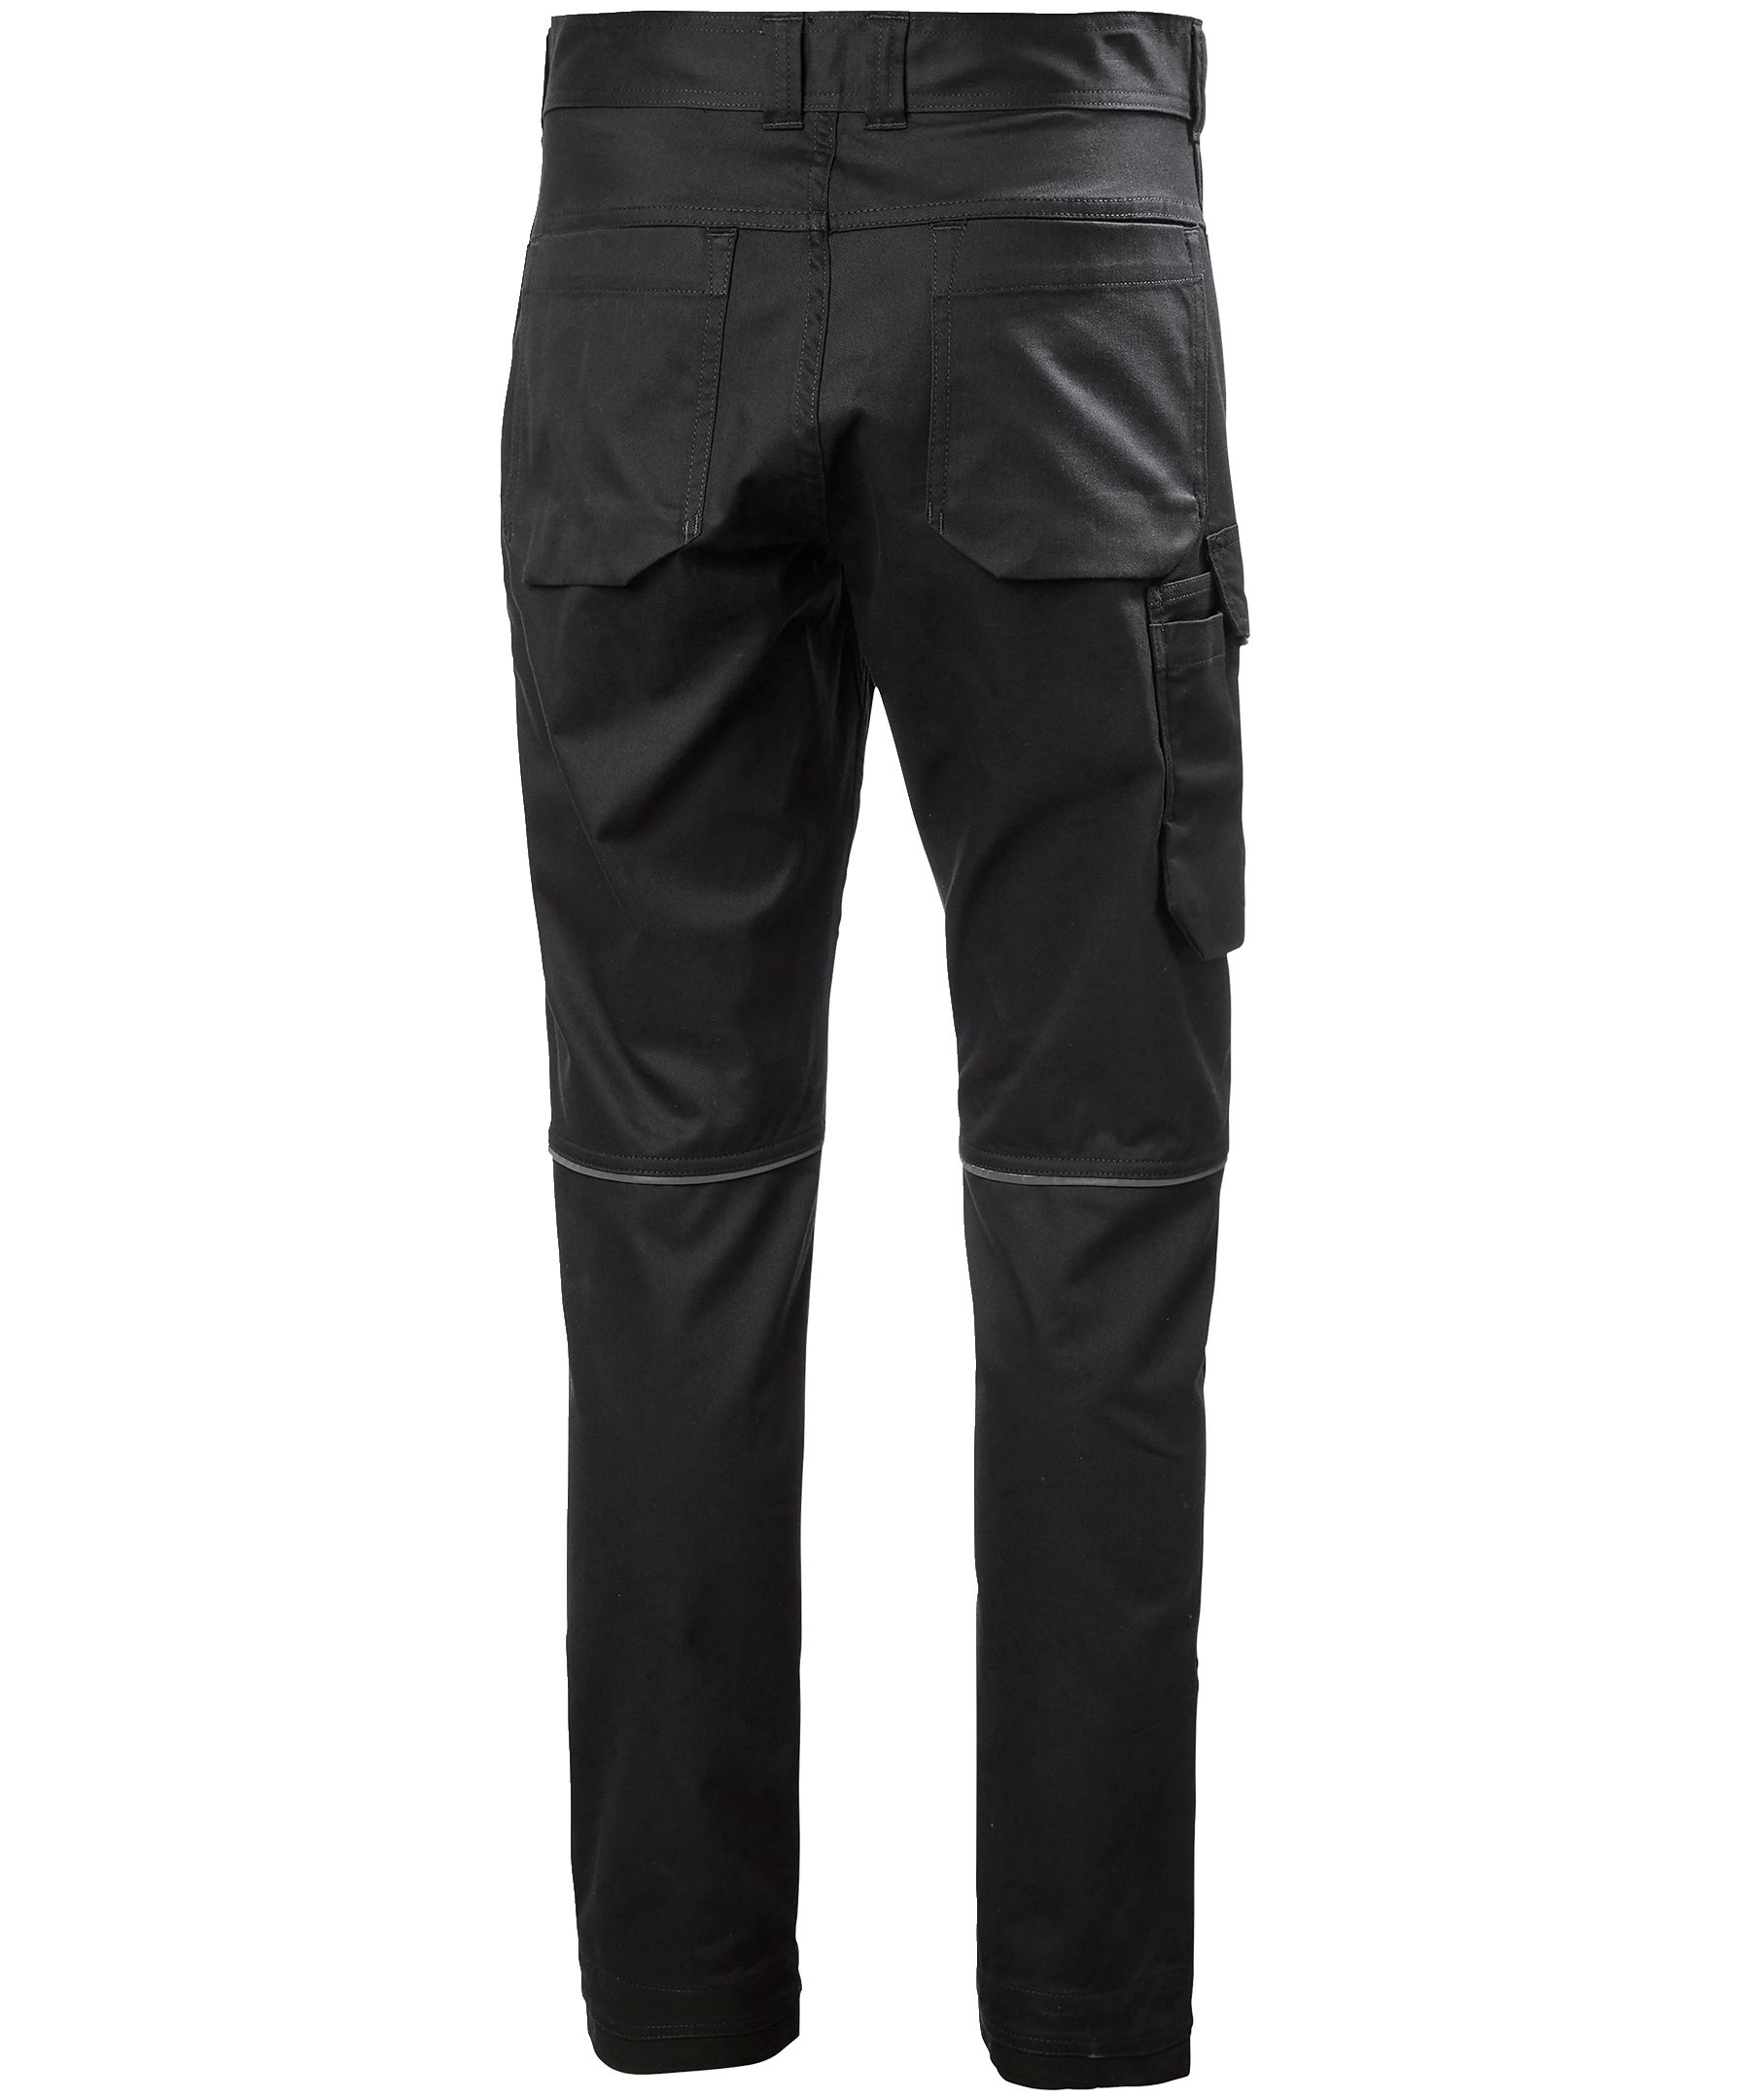 Men's Winter Work pants & trousers, Men's Winter & Insulated Workwear  Pants